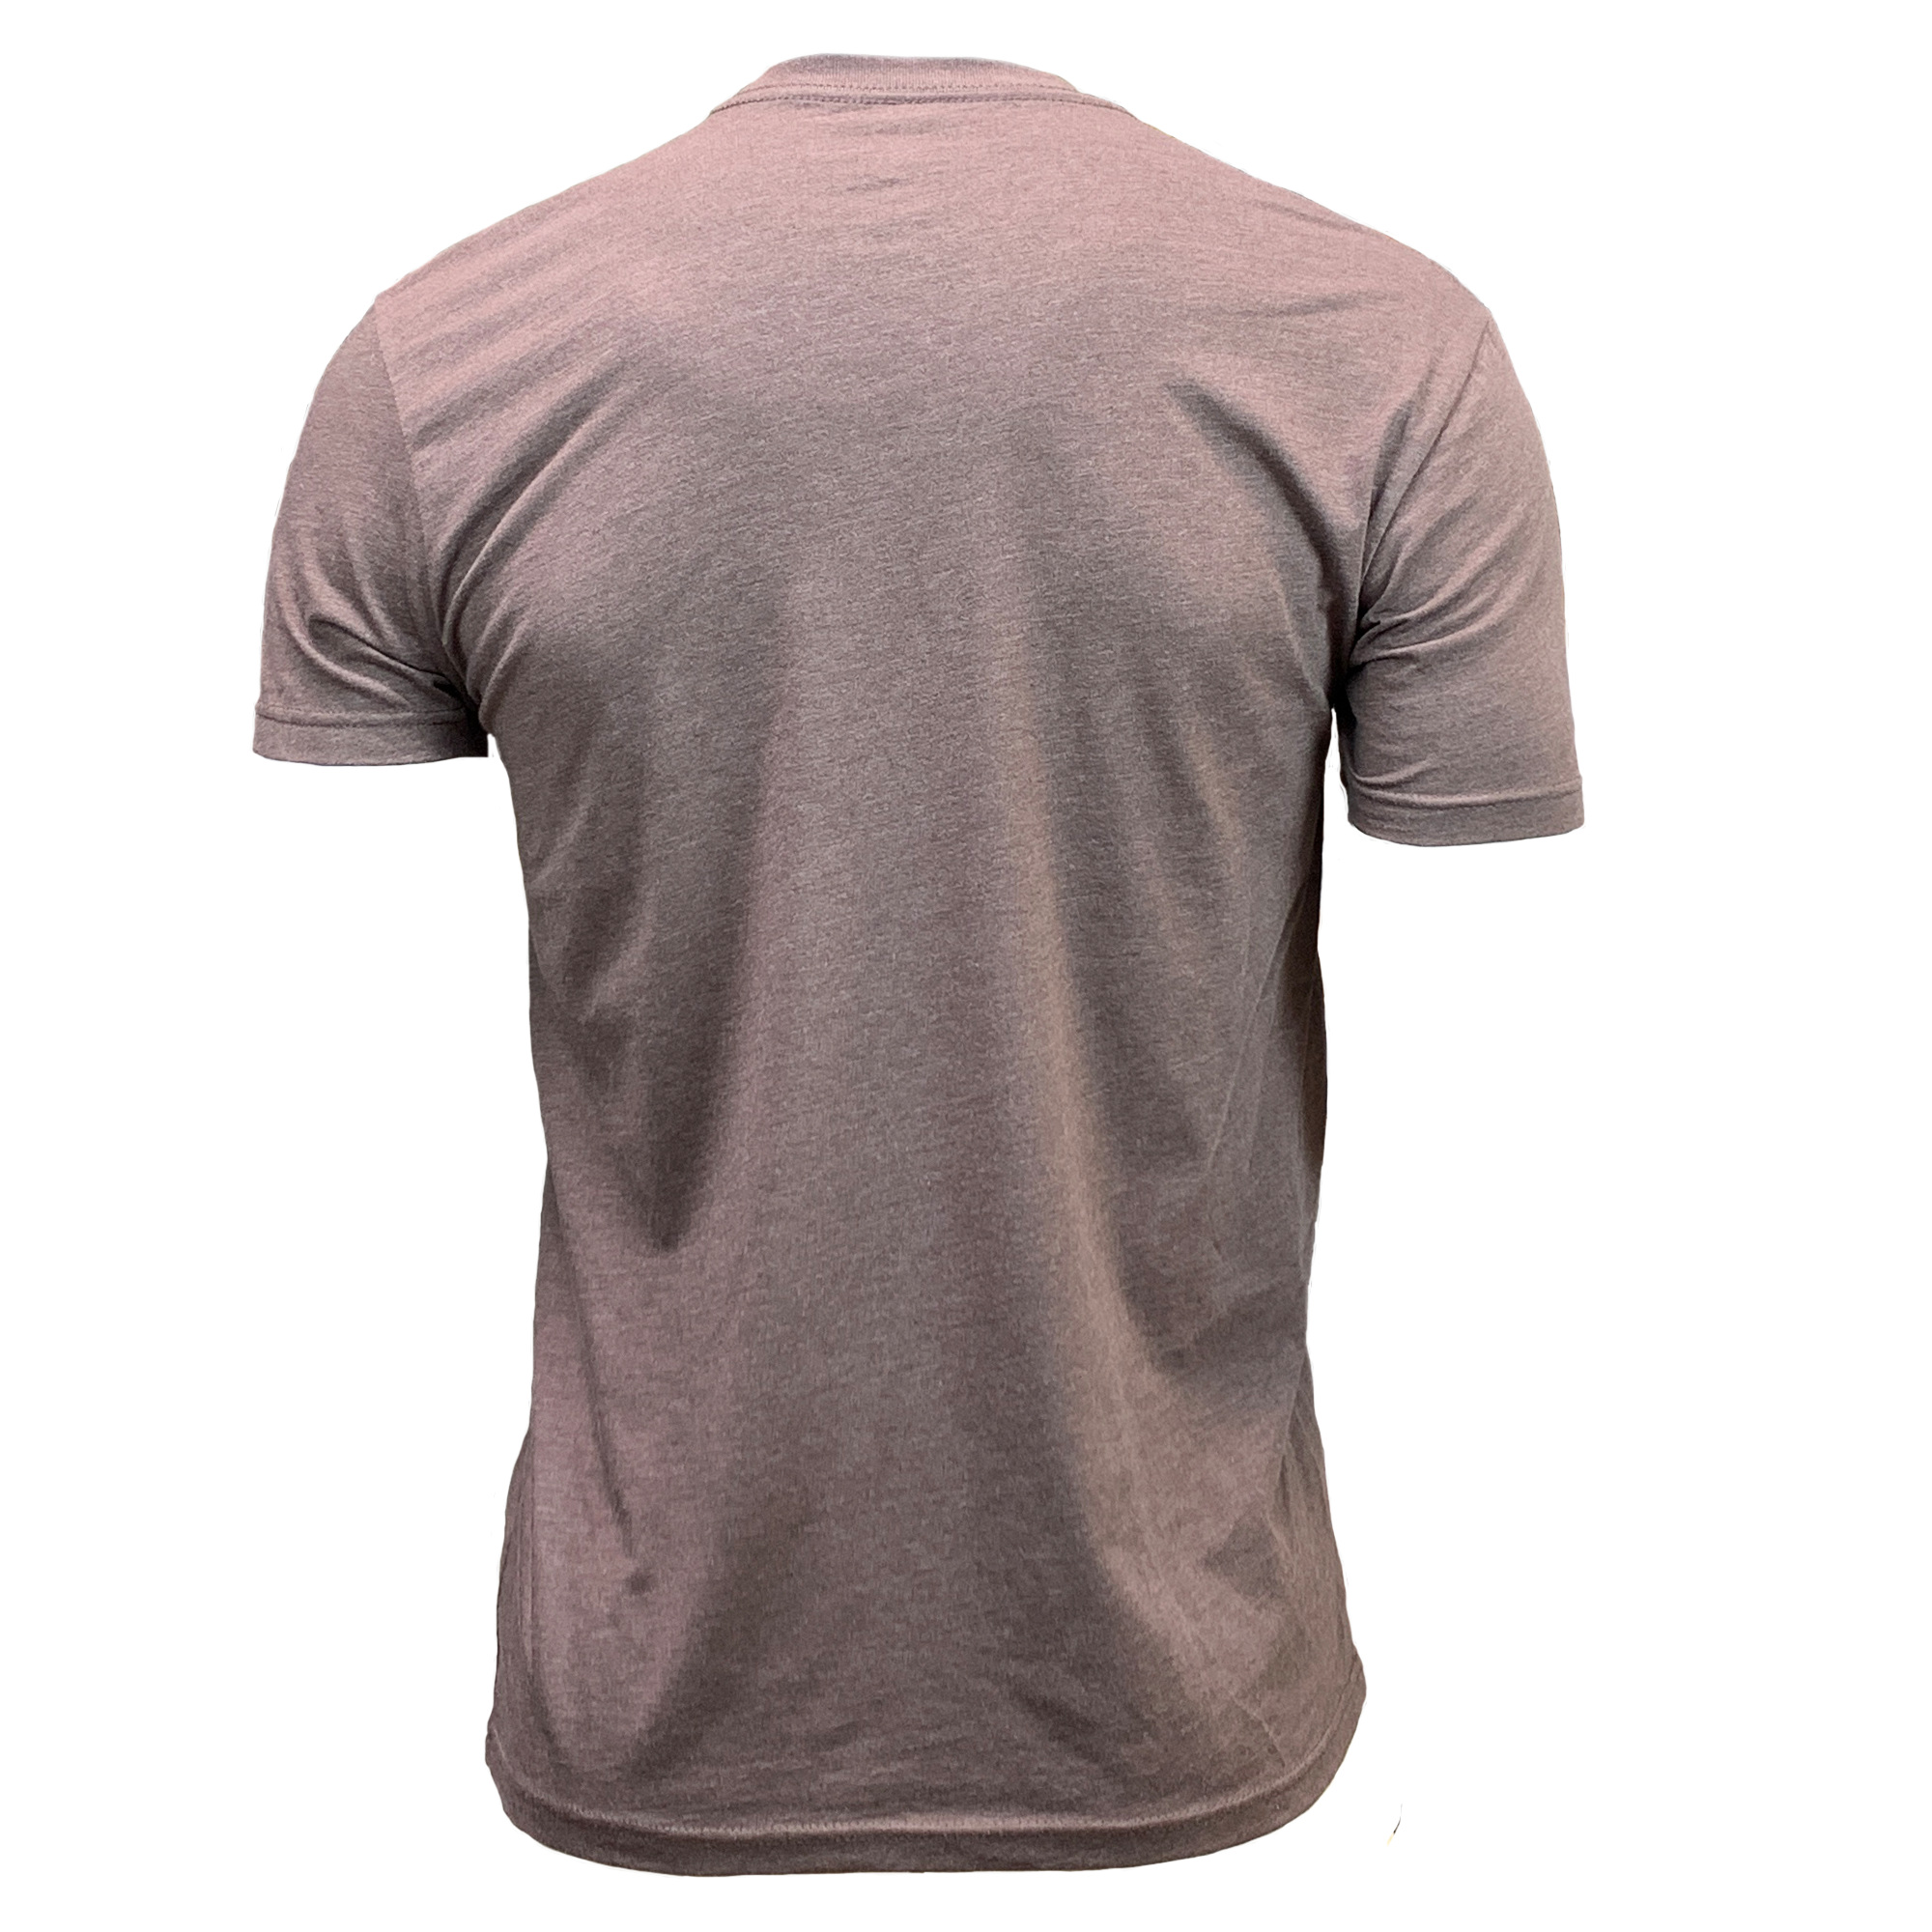 Men's T-Shirt - Retro Savage - Savage Barbell Apparel